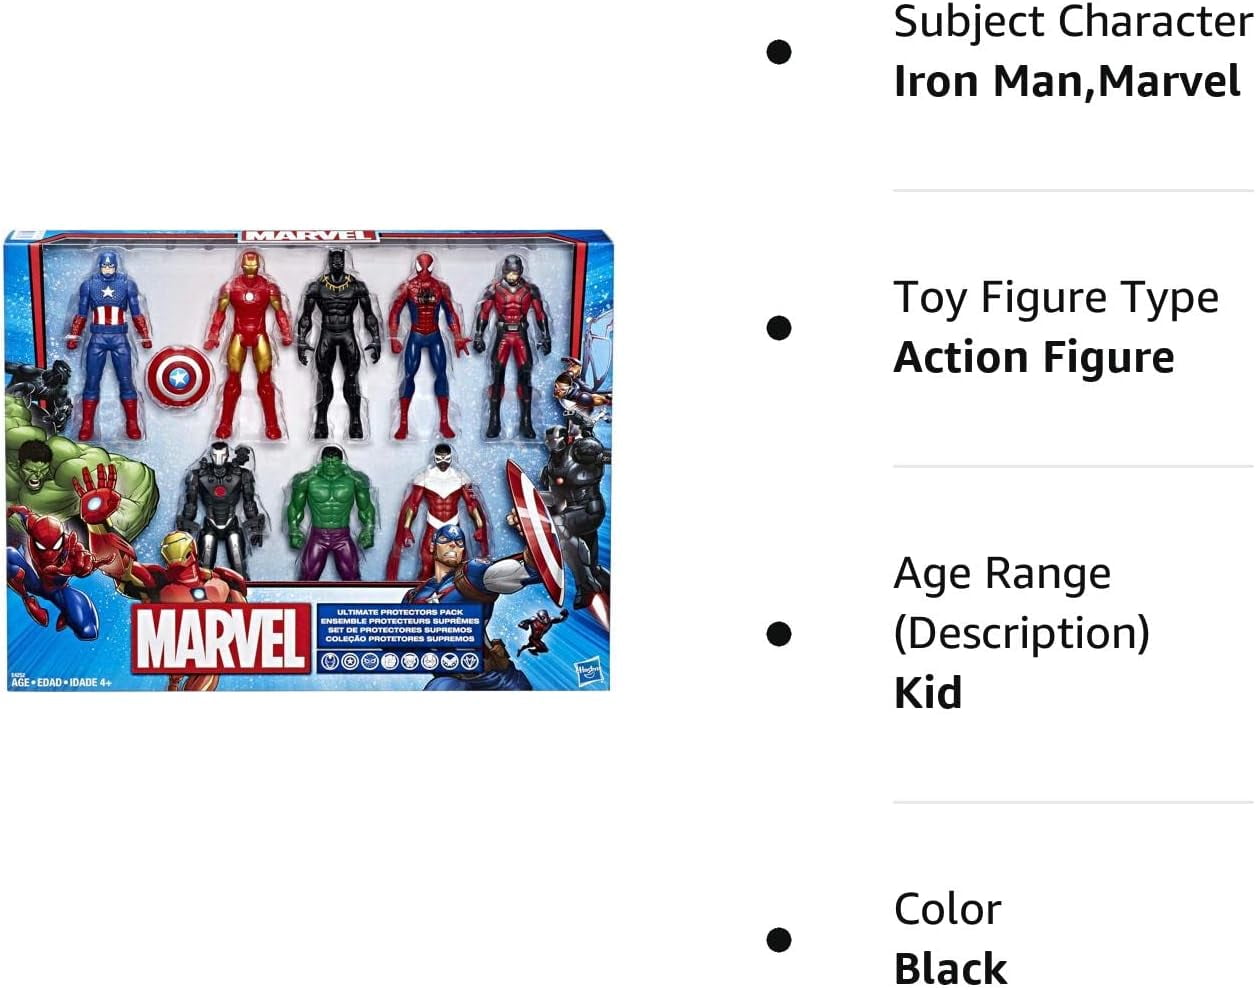  Marvel Avengers Action Figures - Iron Man, Hulk, Black